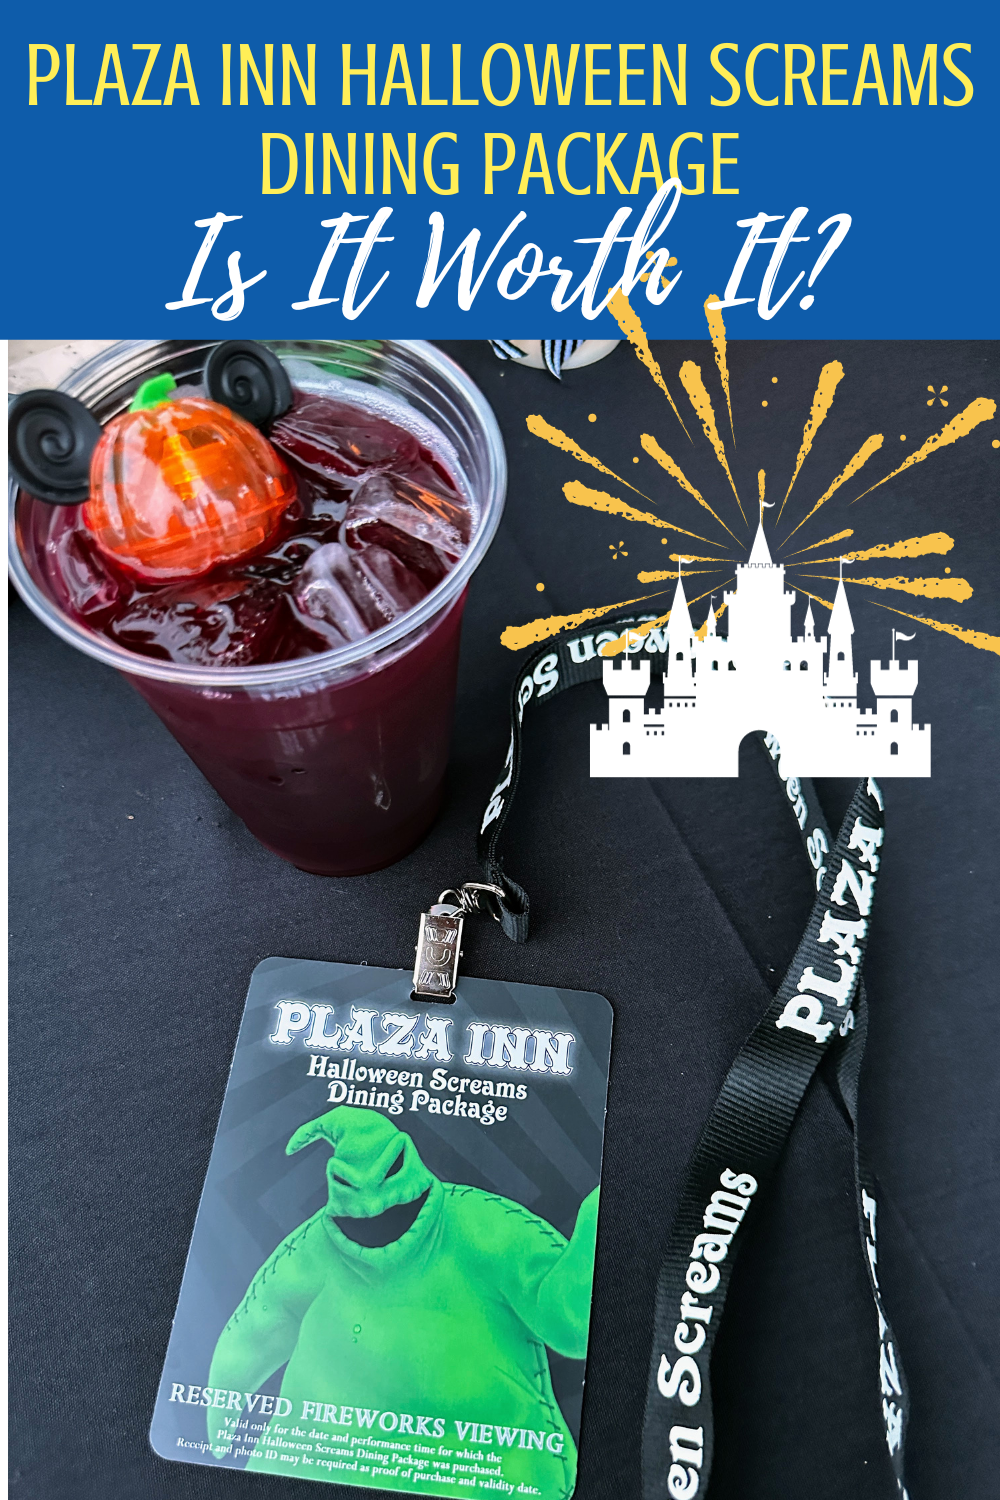 Plaza Inn Halloween Screams Dining Package- is it worth it?